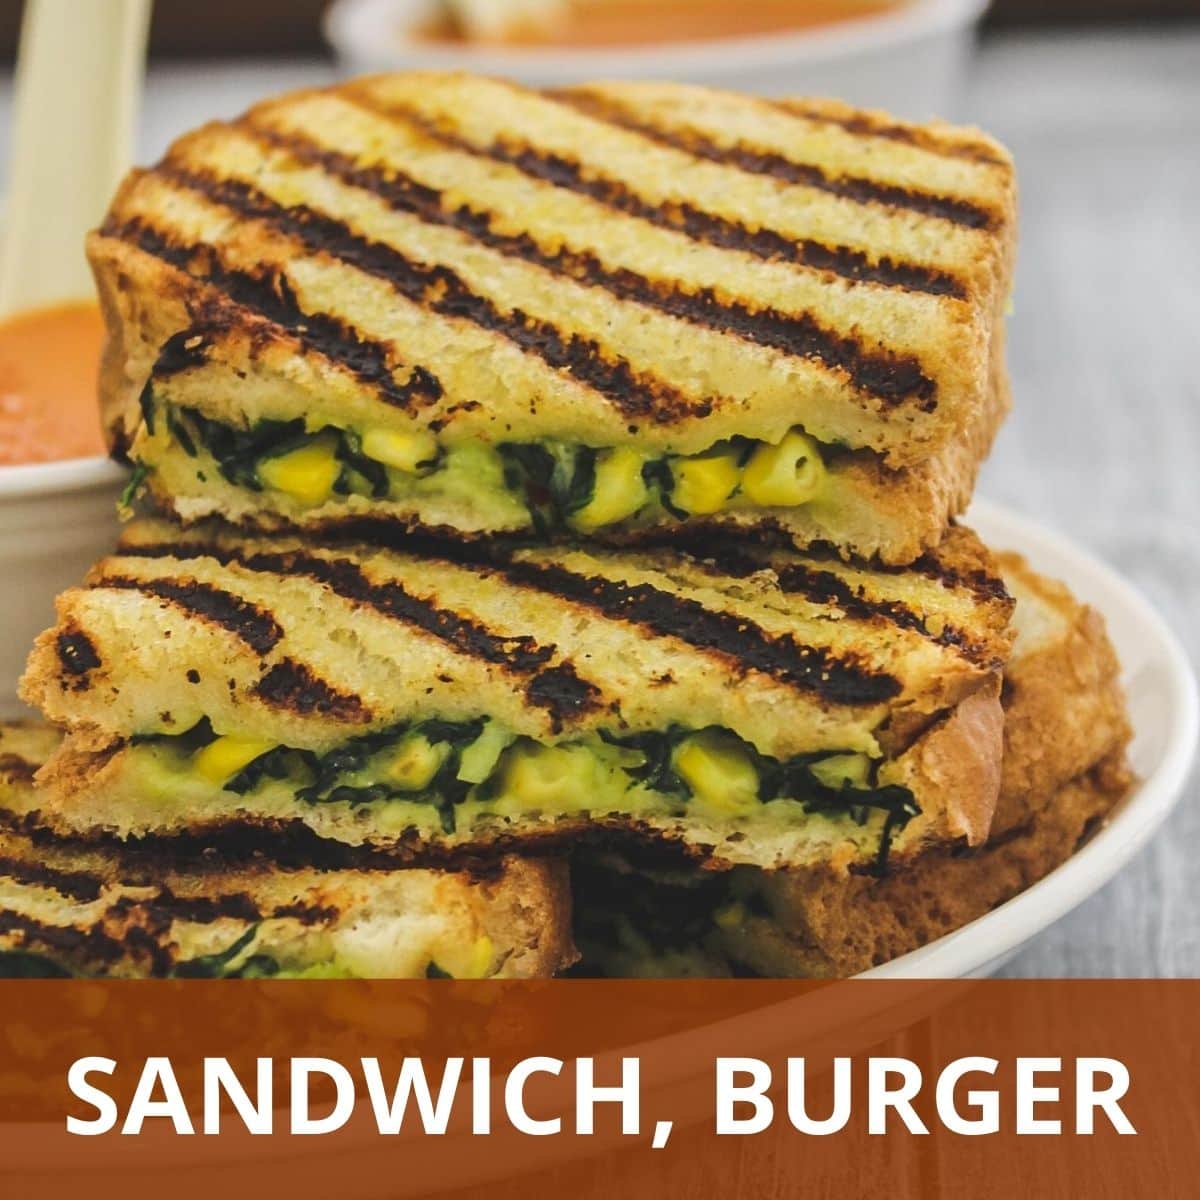 Sandwiches / Burgers